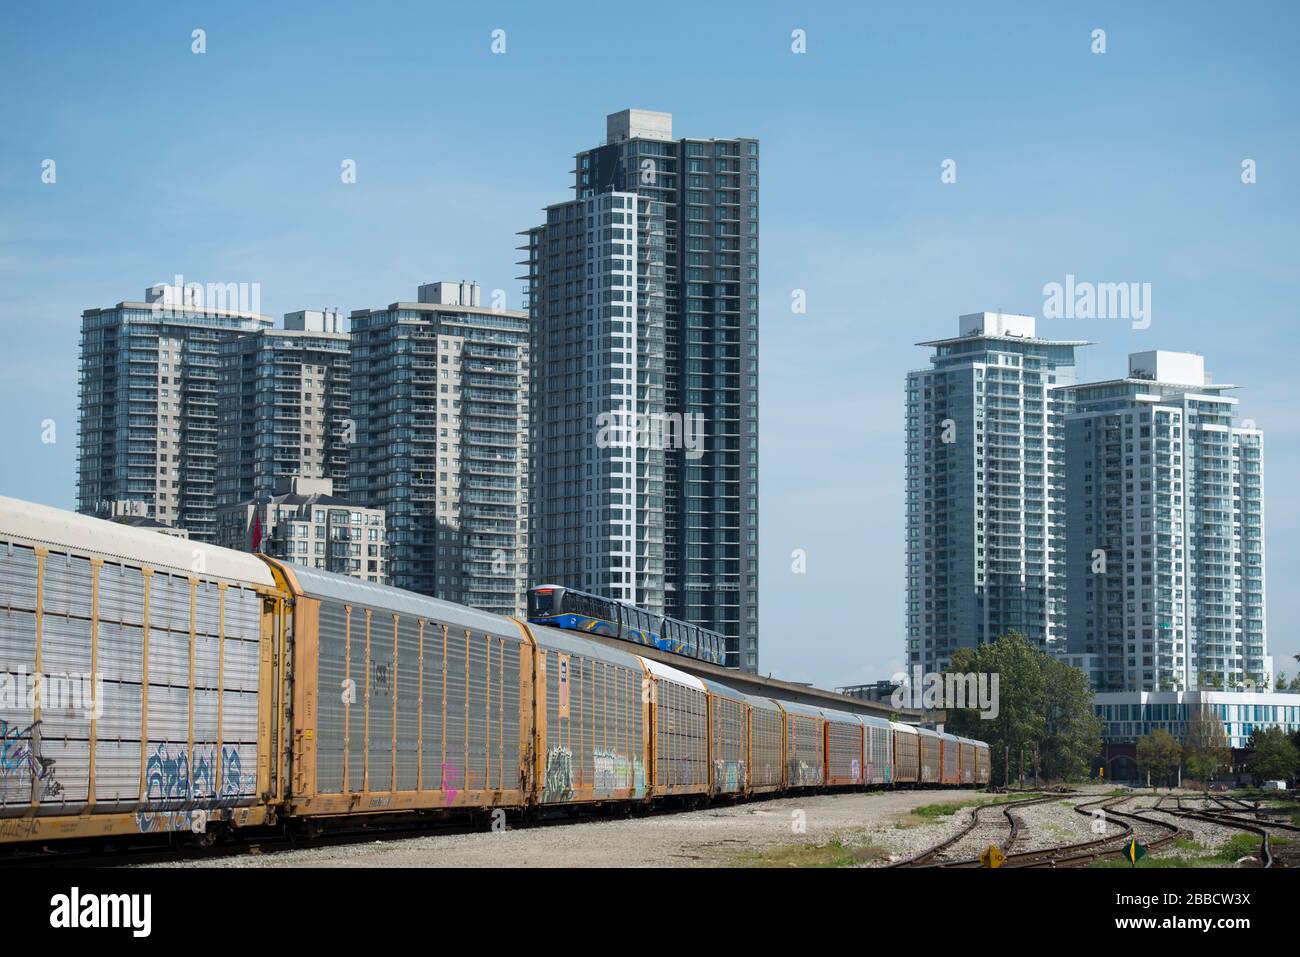 Rail yard, Skytrain and condominiums in New Westminster, British Columbia, Canada. Stock Photo